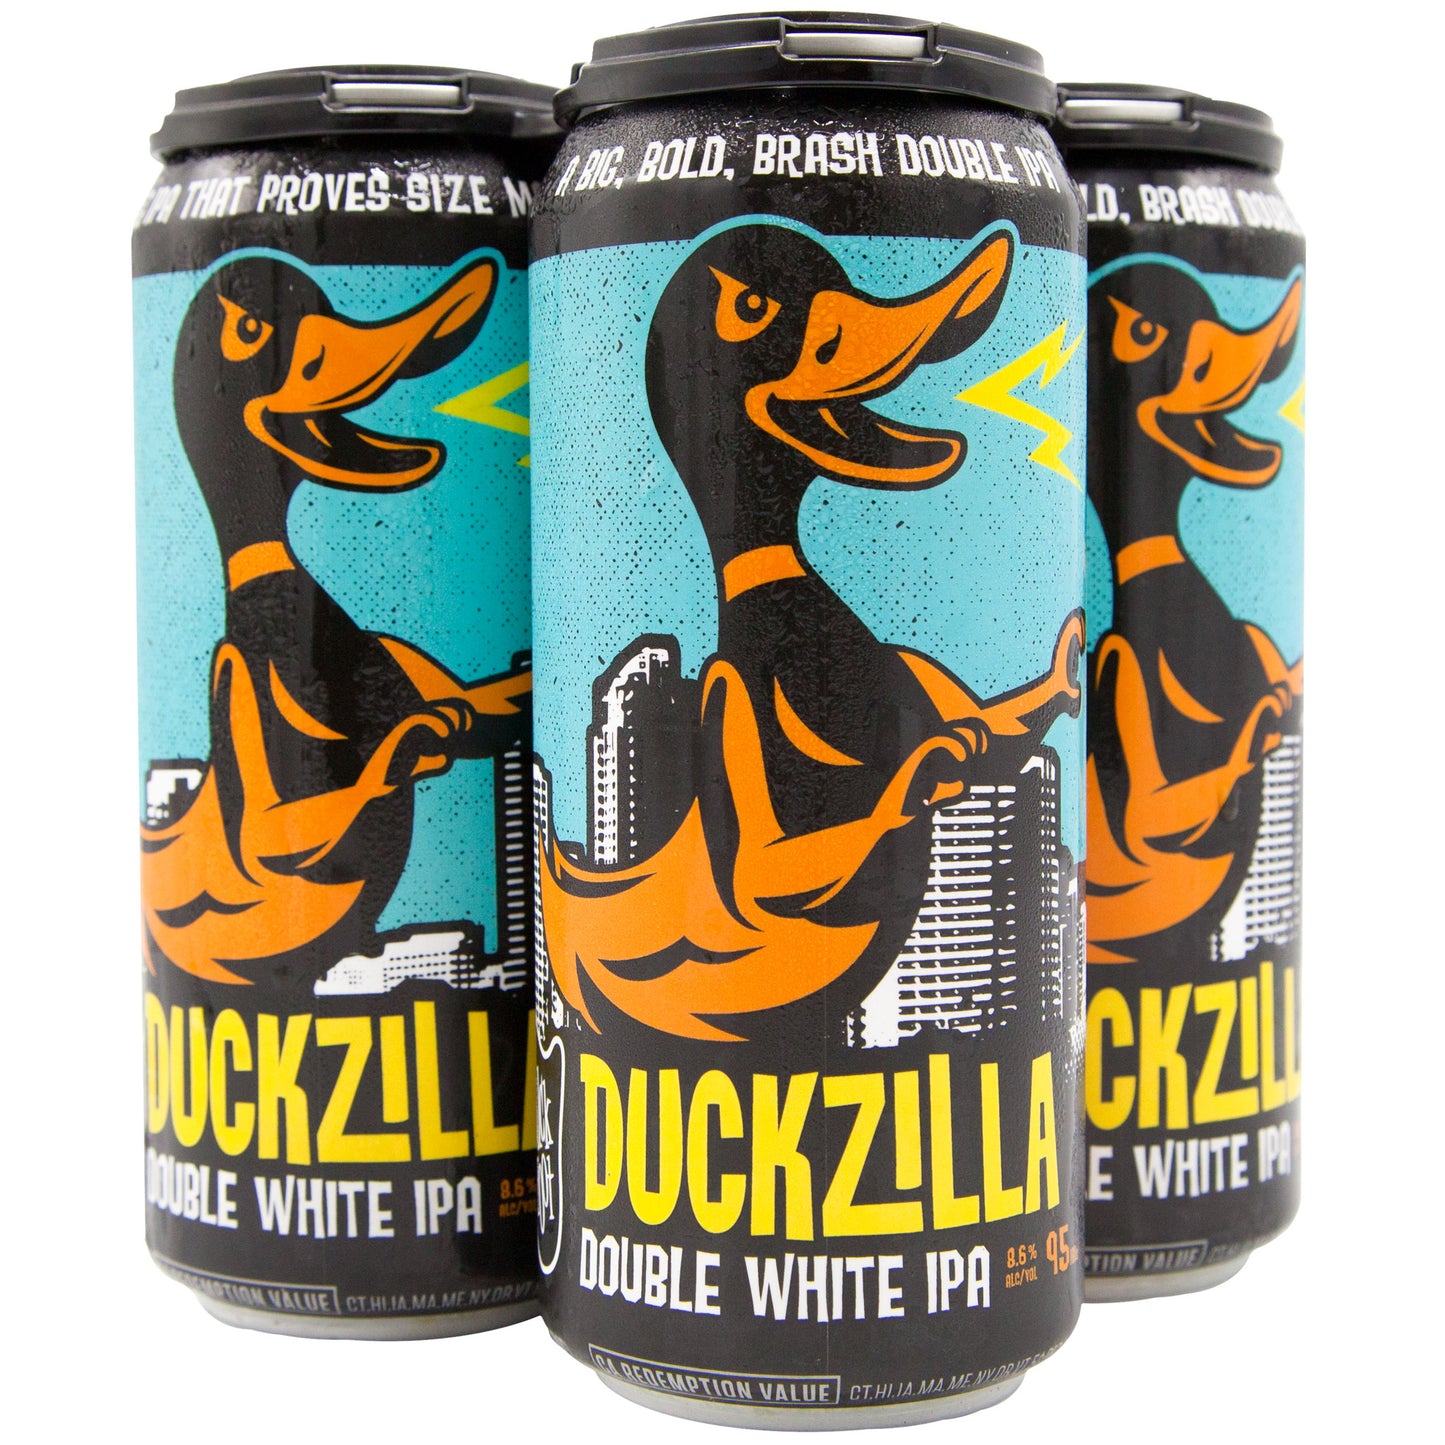 Duckzilla - Double White IPA (4-pack)